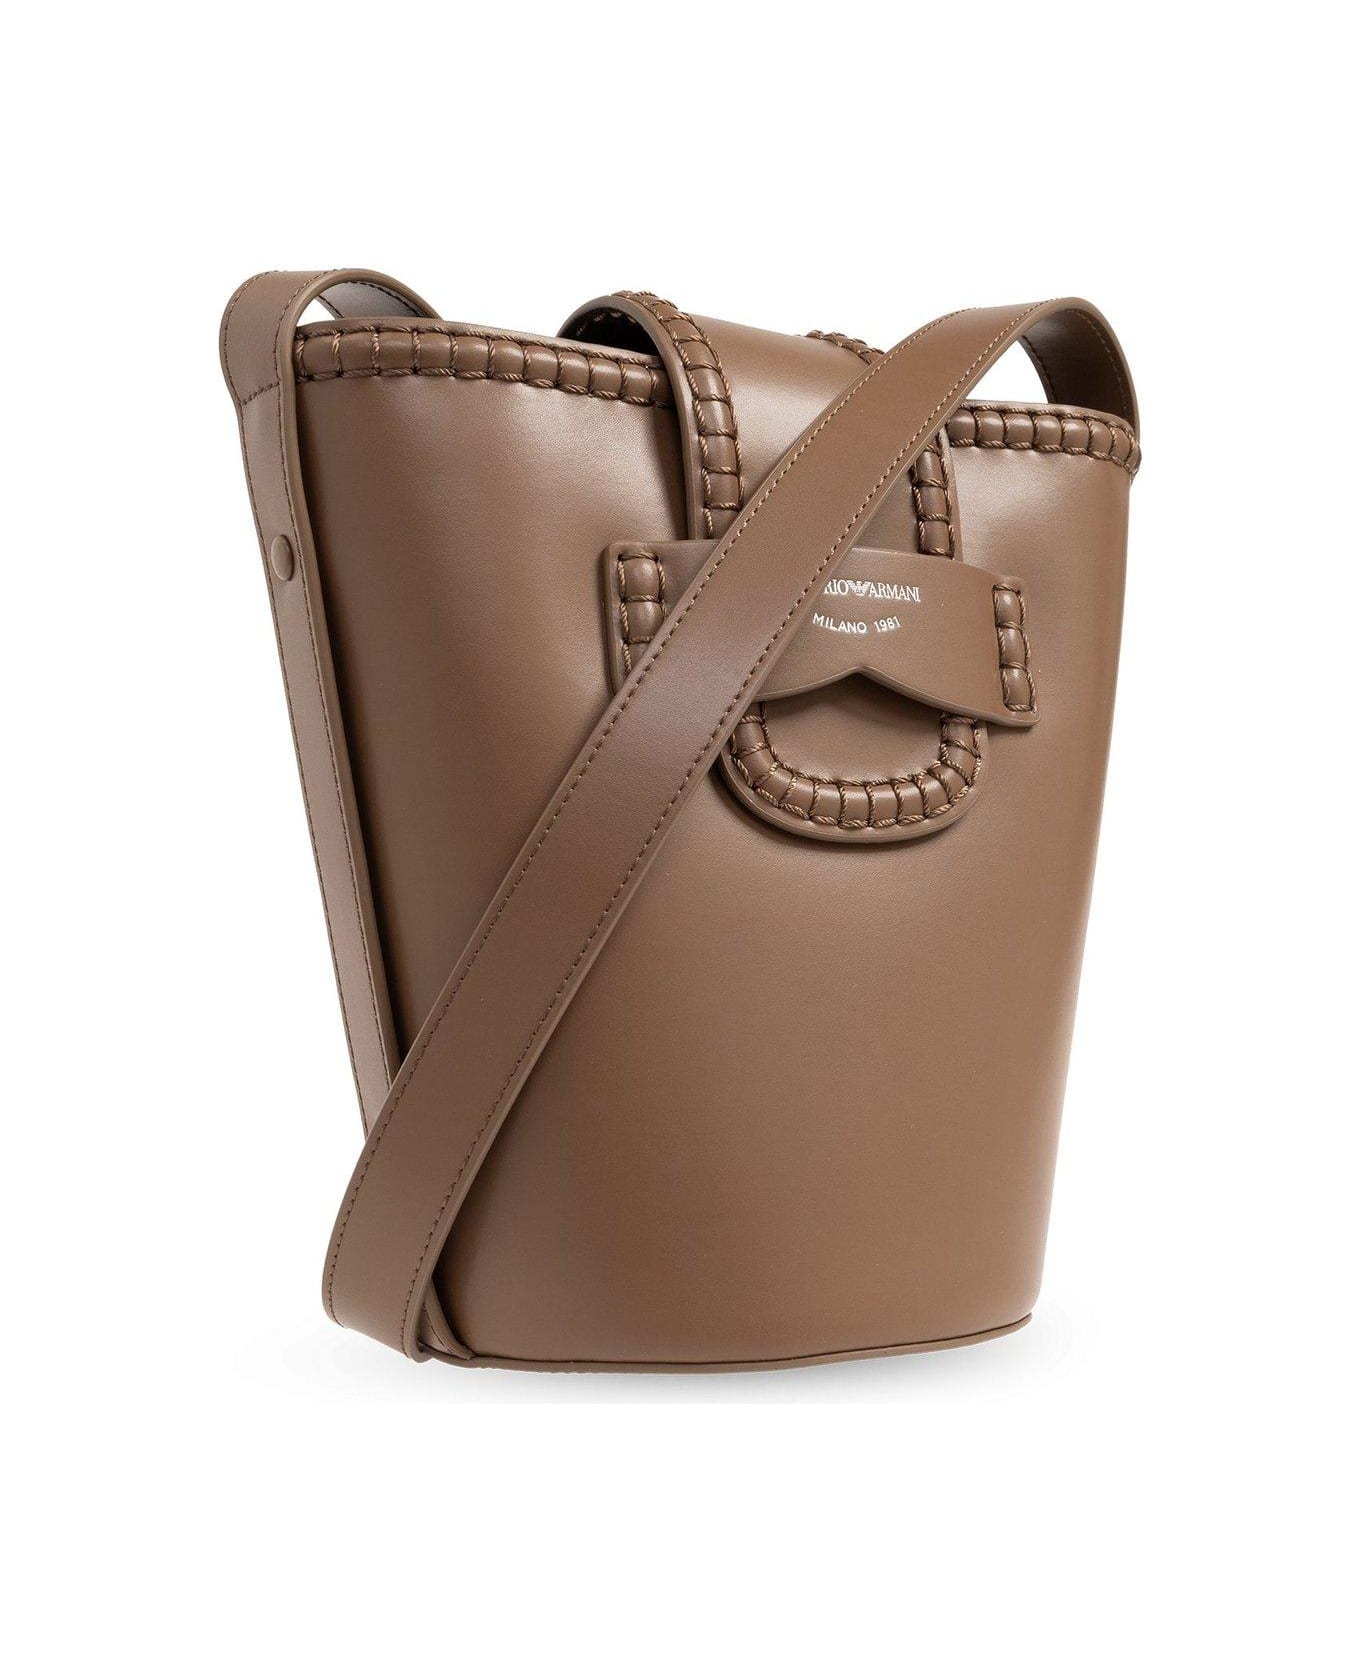 Emporio Armani Shoulder Bag With Logo - Leather Brown